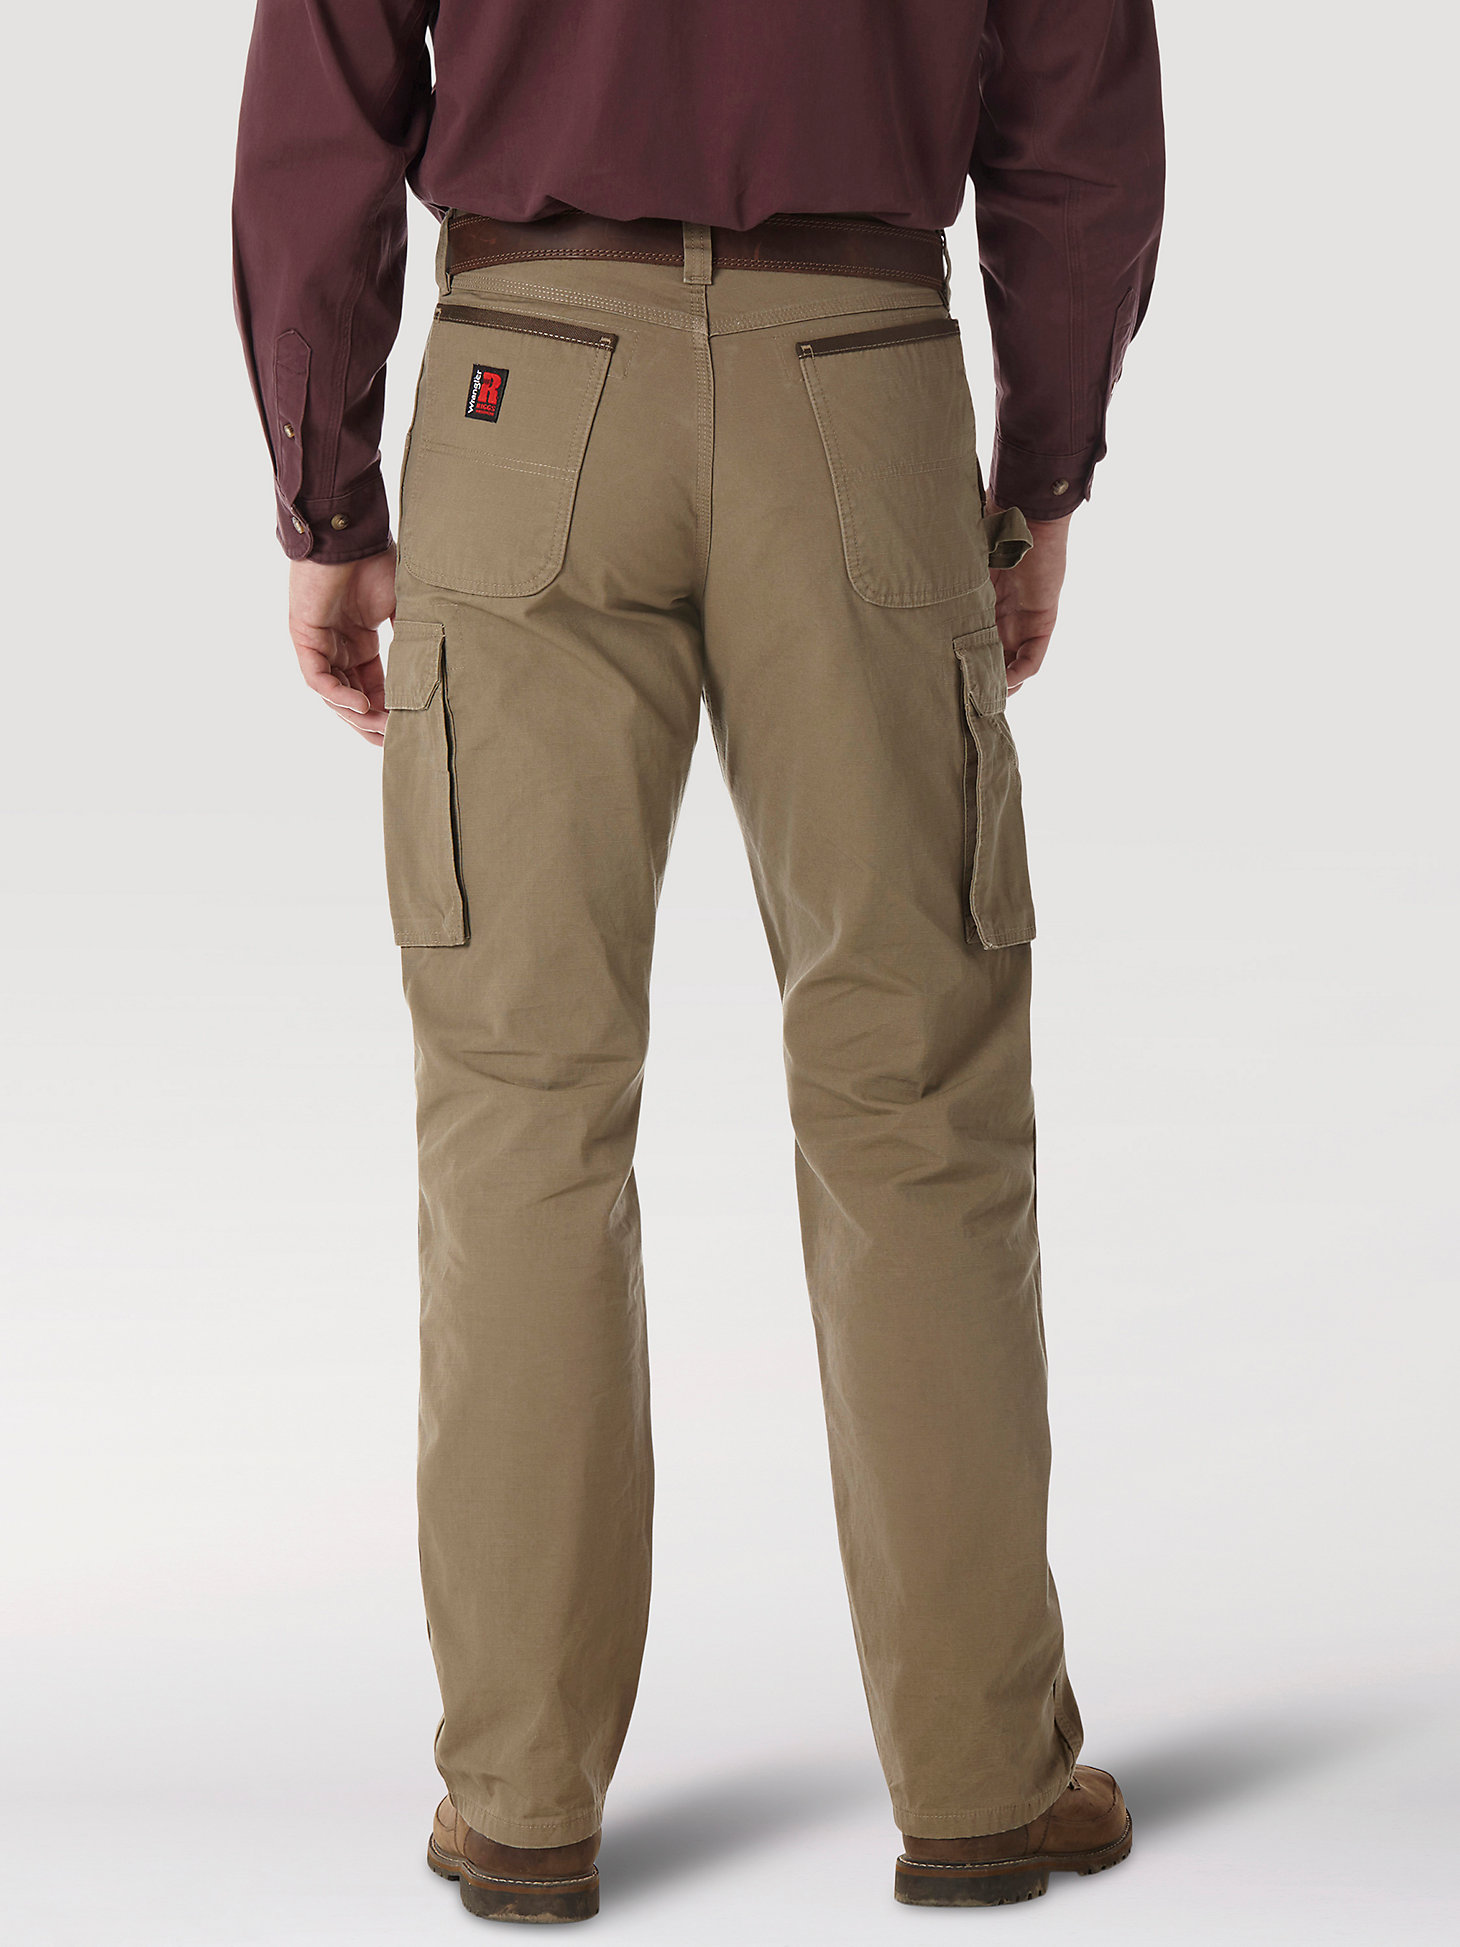 Wrangler Riggs Workwear Mens Riggs Workwear Technical Pant Pants